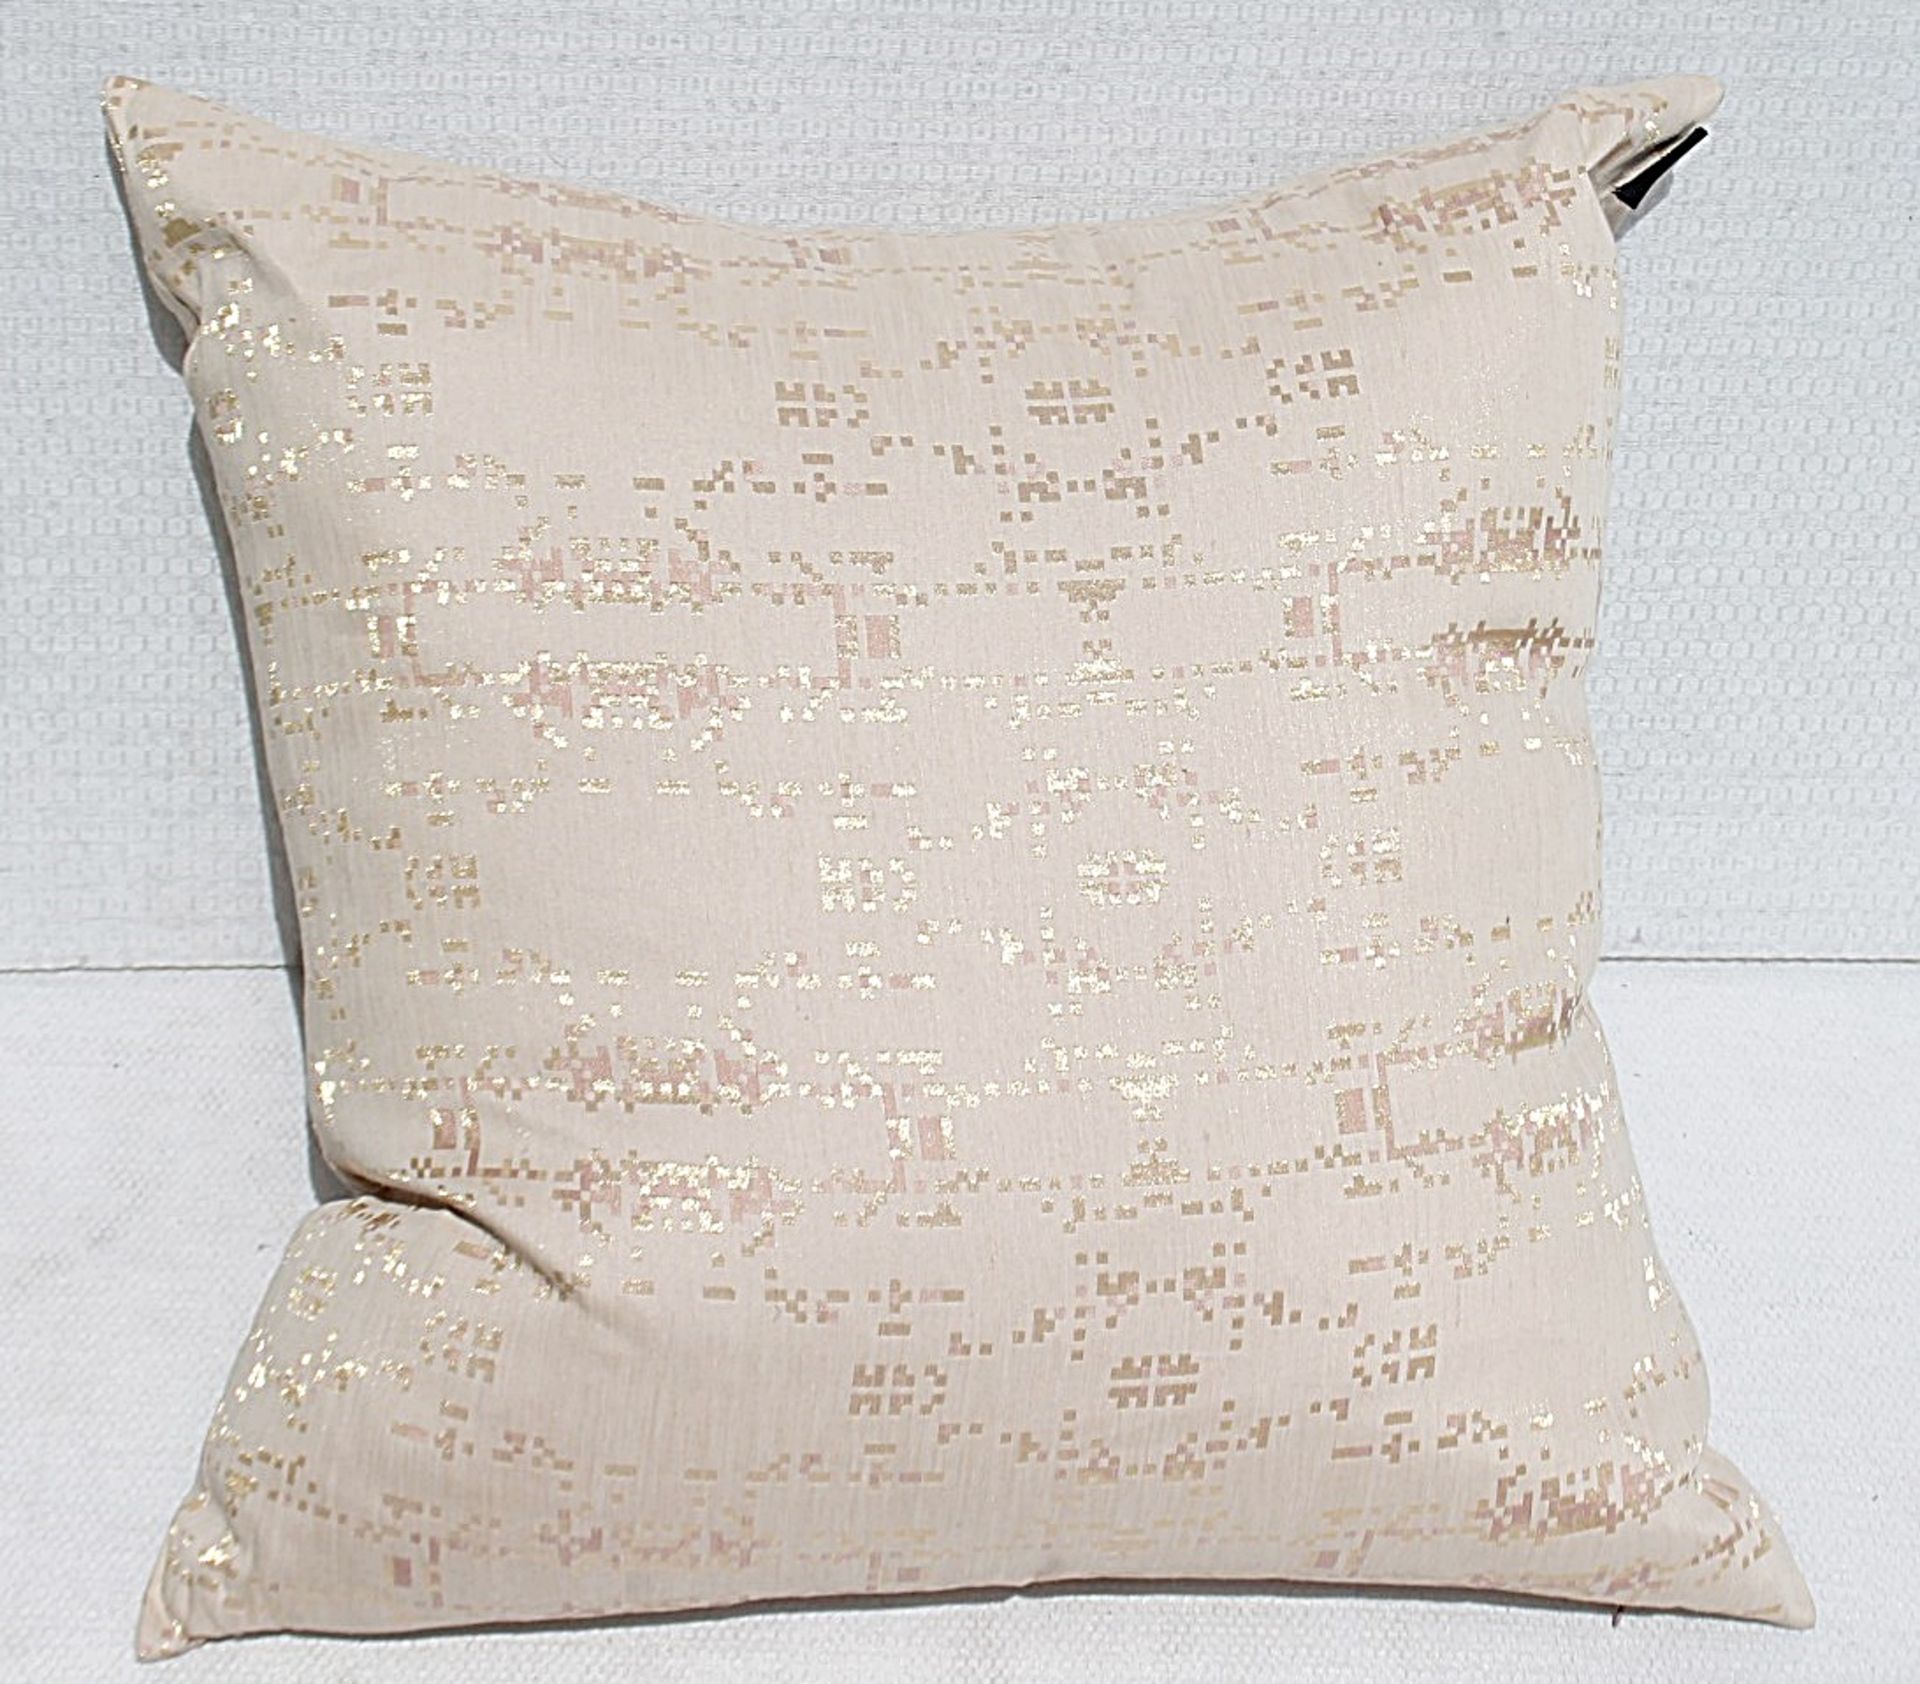 1 x BEATWOVEN 'Adage' Designer Large Weaved Silk Cushion - Original Price £295.00 - Ref: 5536778/